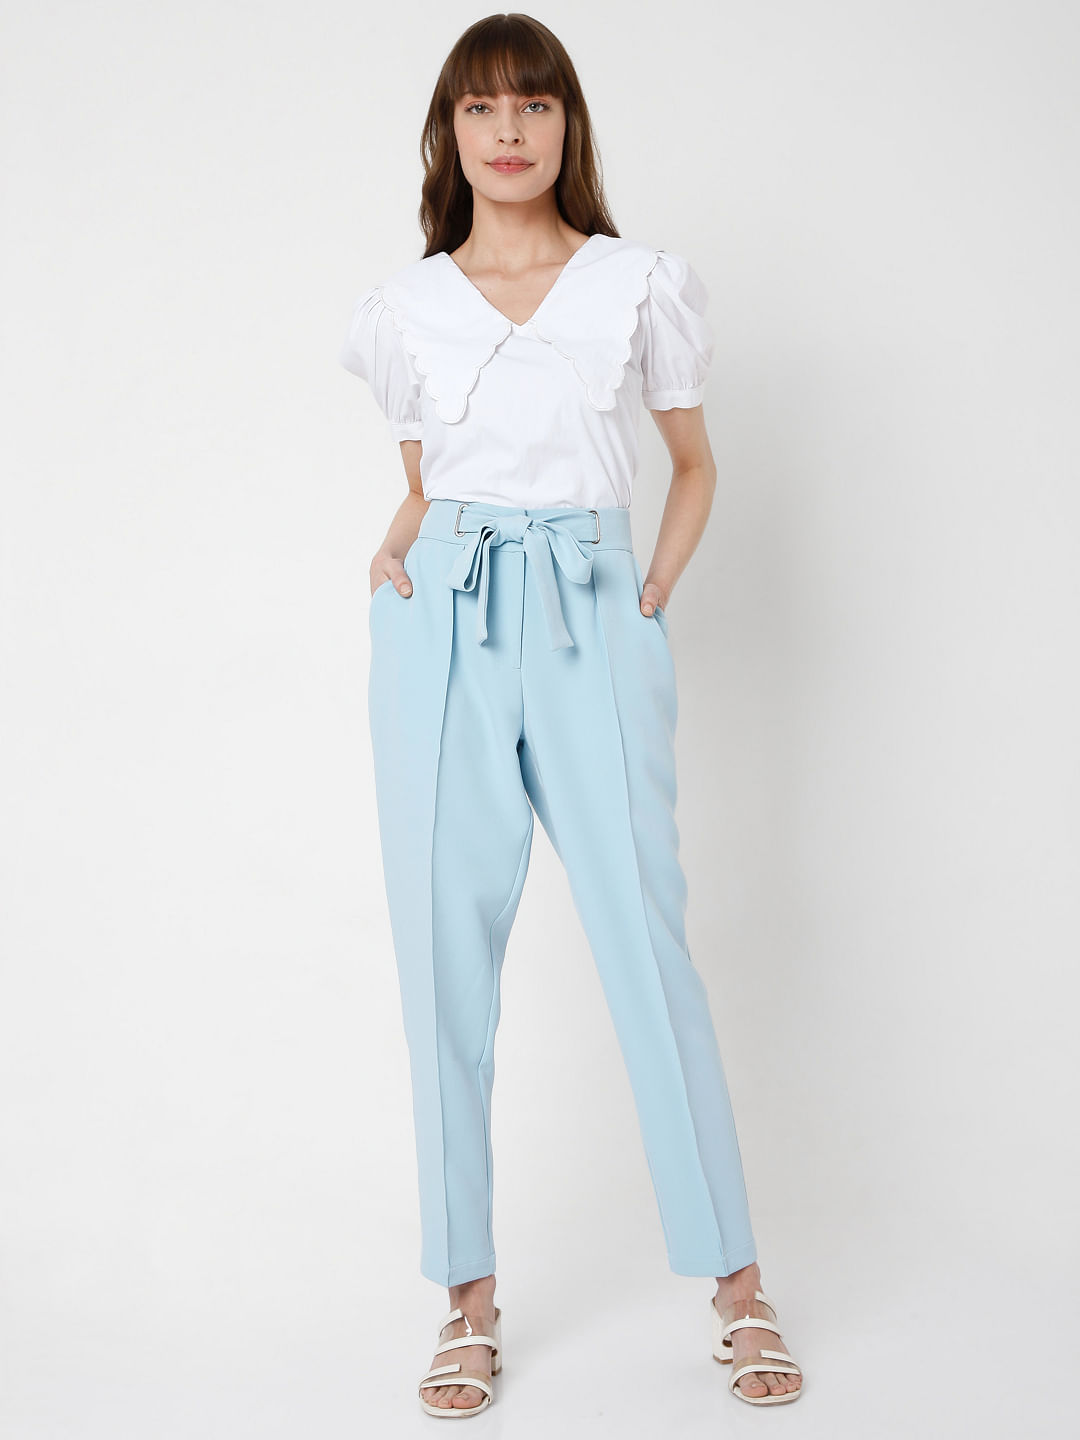 Slim Trouser Ankle Pants - Light Blue Heather Blue | NYDJ